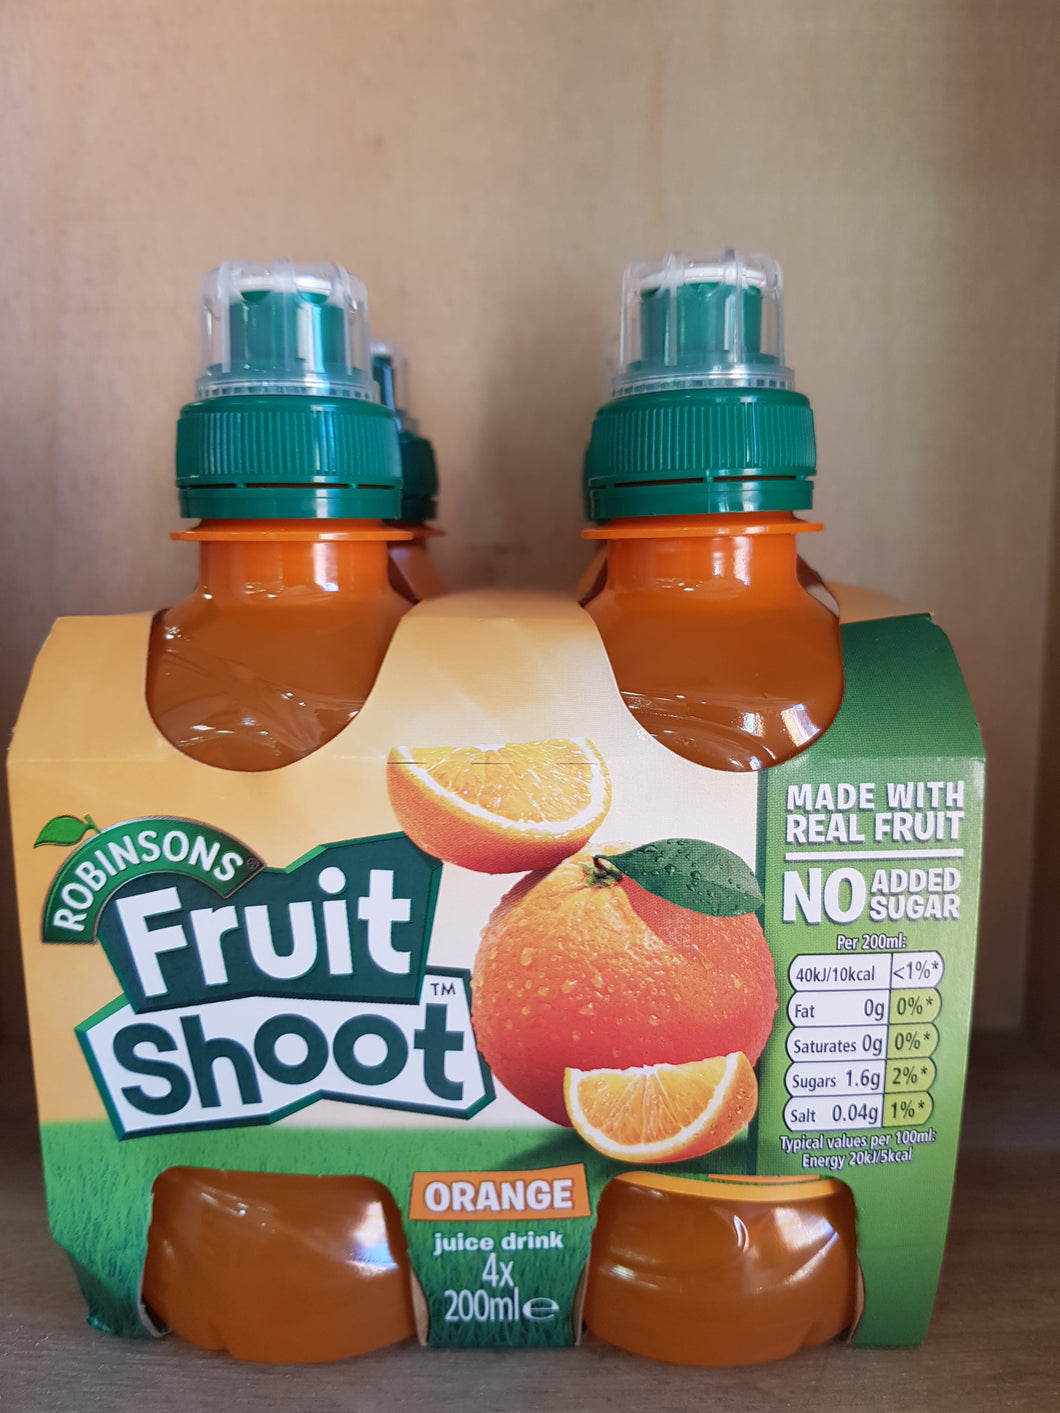 Robinsons Fruit Shoot Orange No Added Sugar 4 x 200ml